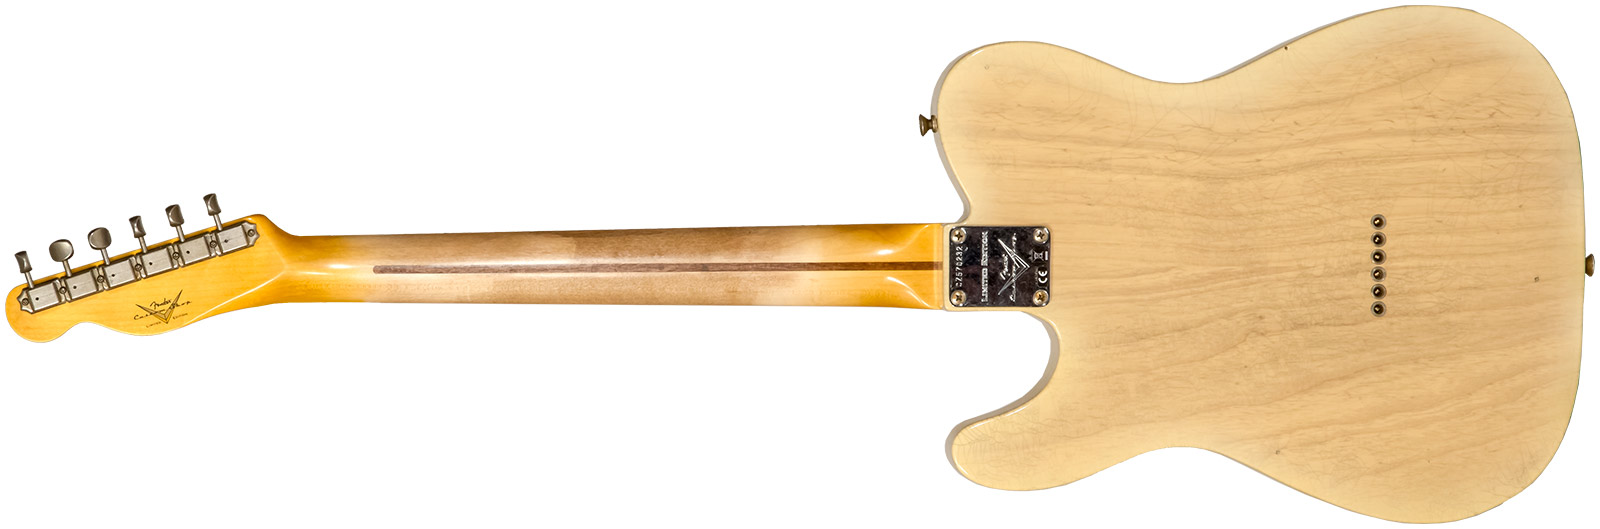 Fender Custom Shop Tele 1955 2s Ht Mn #cz570232 - Journeyman Relic Natural Blonde - Guitarra eléctrica con forma de tel - Variation 1